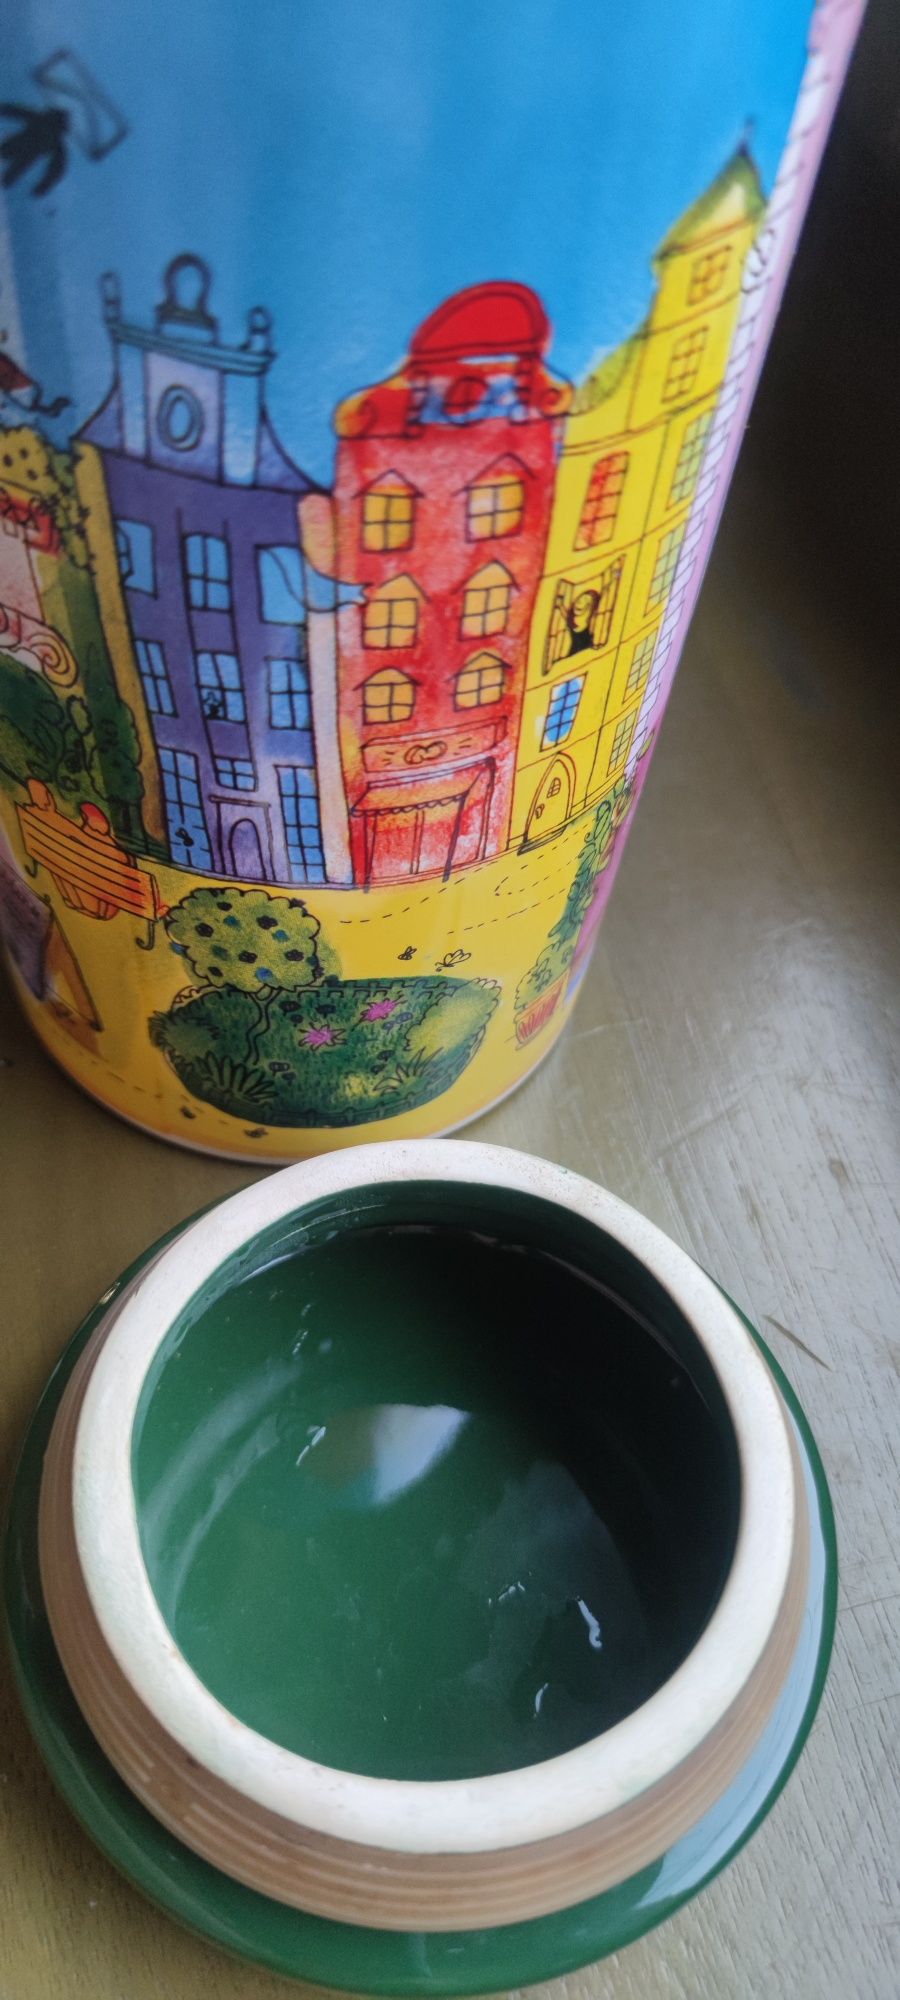 Kolorowy słój na kawę. Rysunki Grochola i Szelągowska